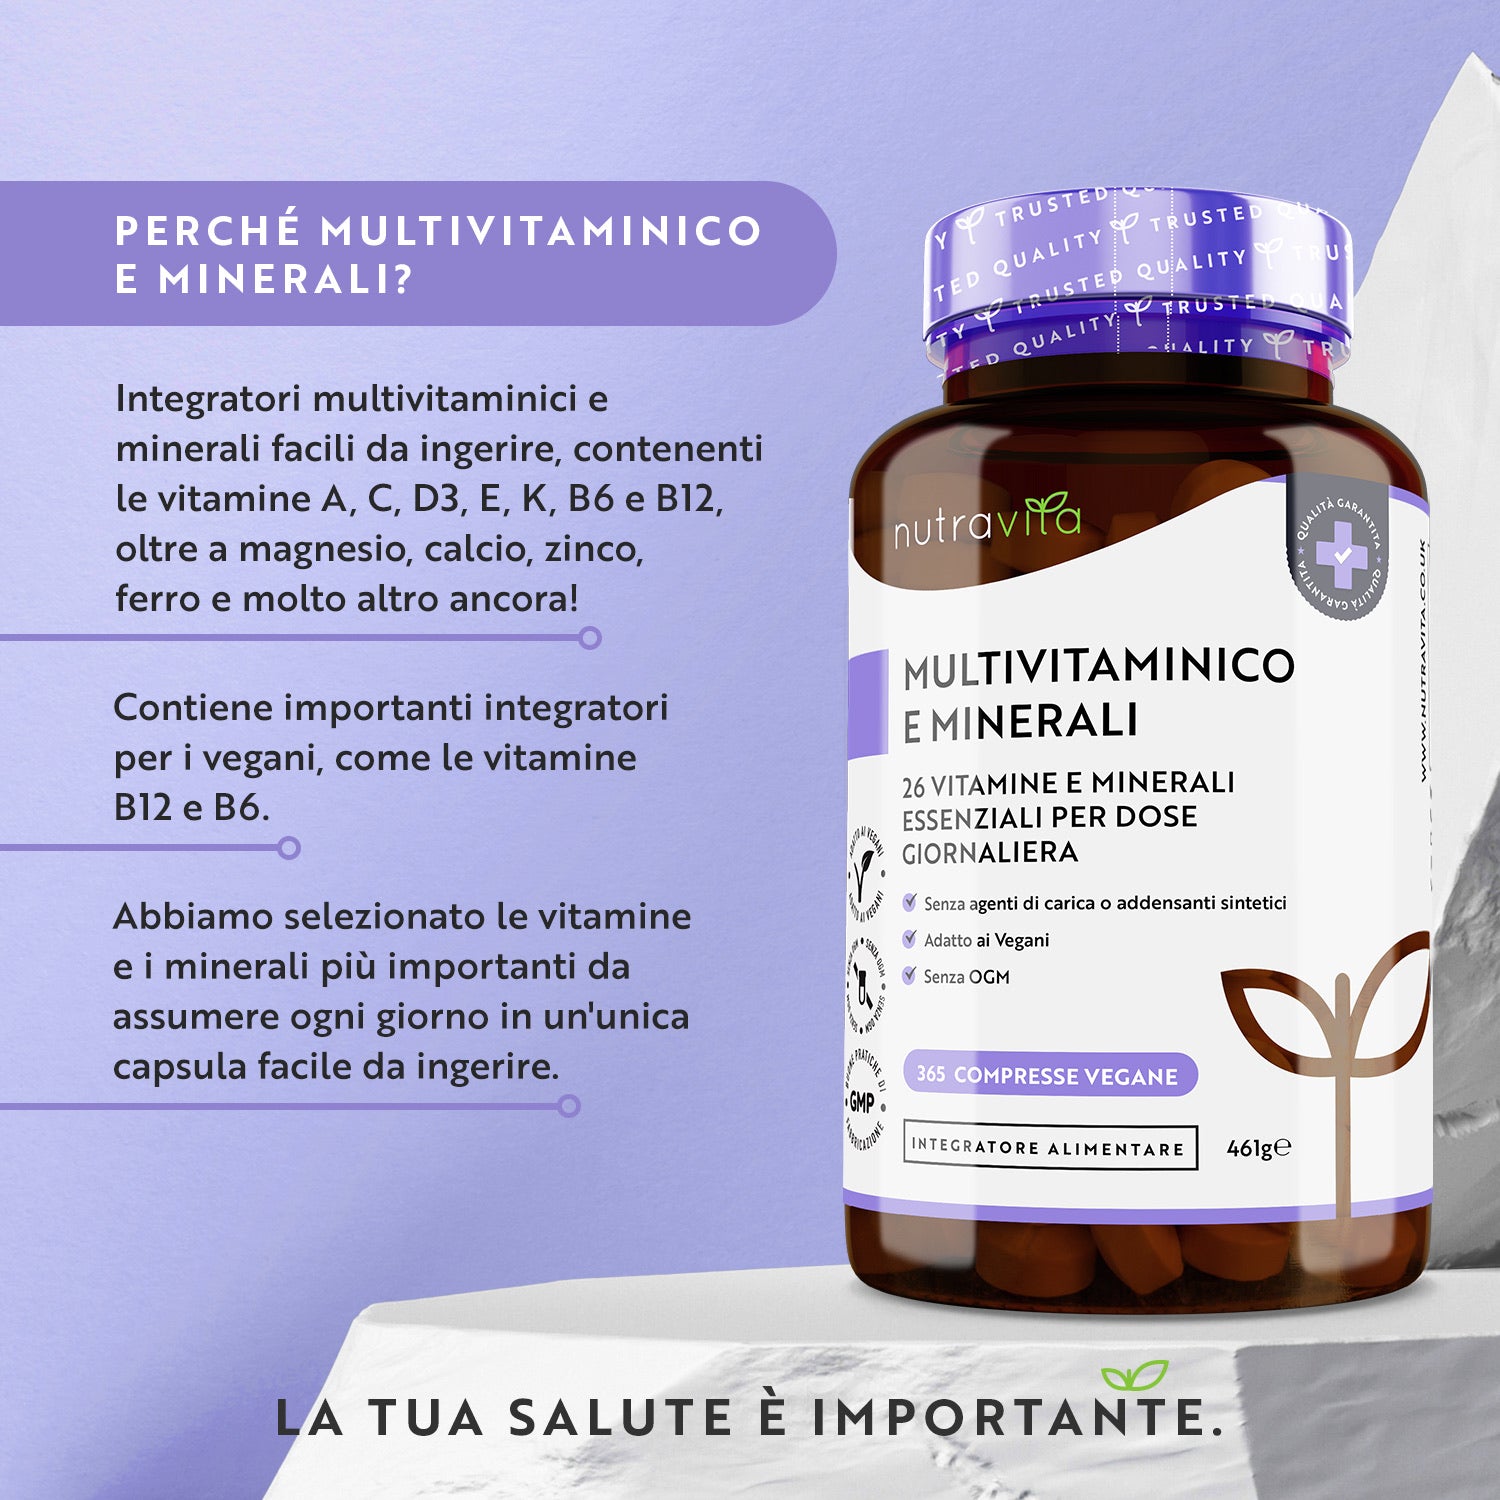 Multivitamine - 26 Ingredienti Essenziali 365 Compresse Vegane